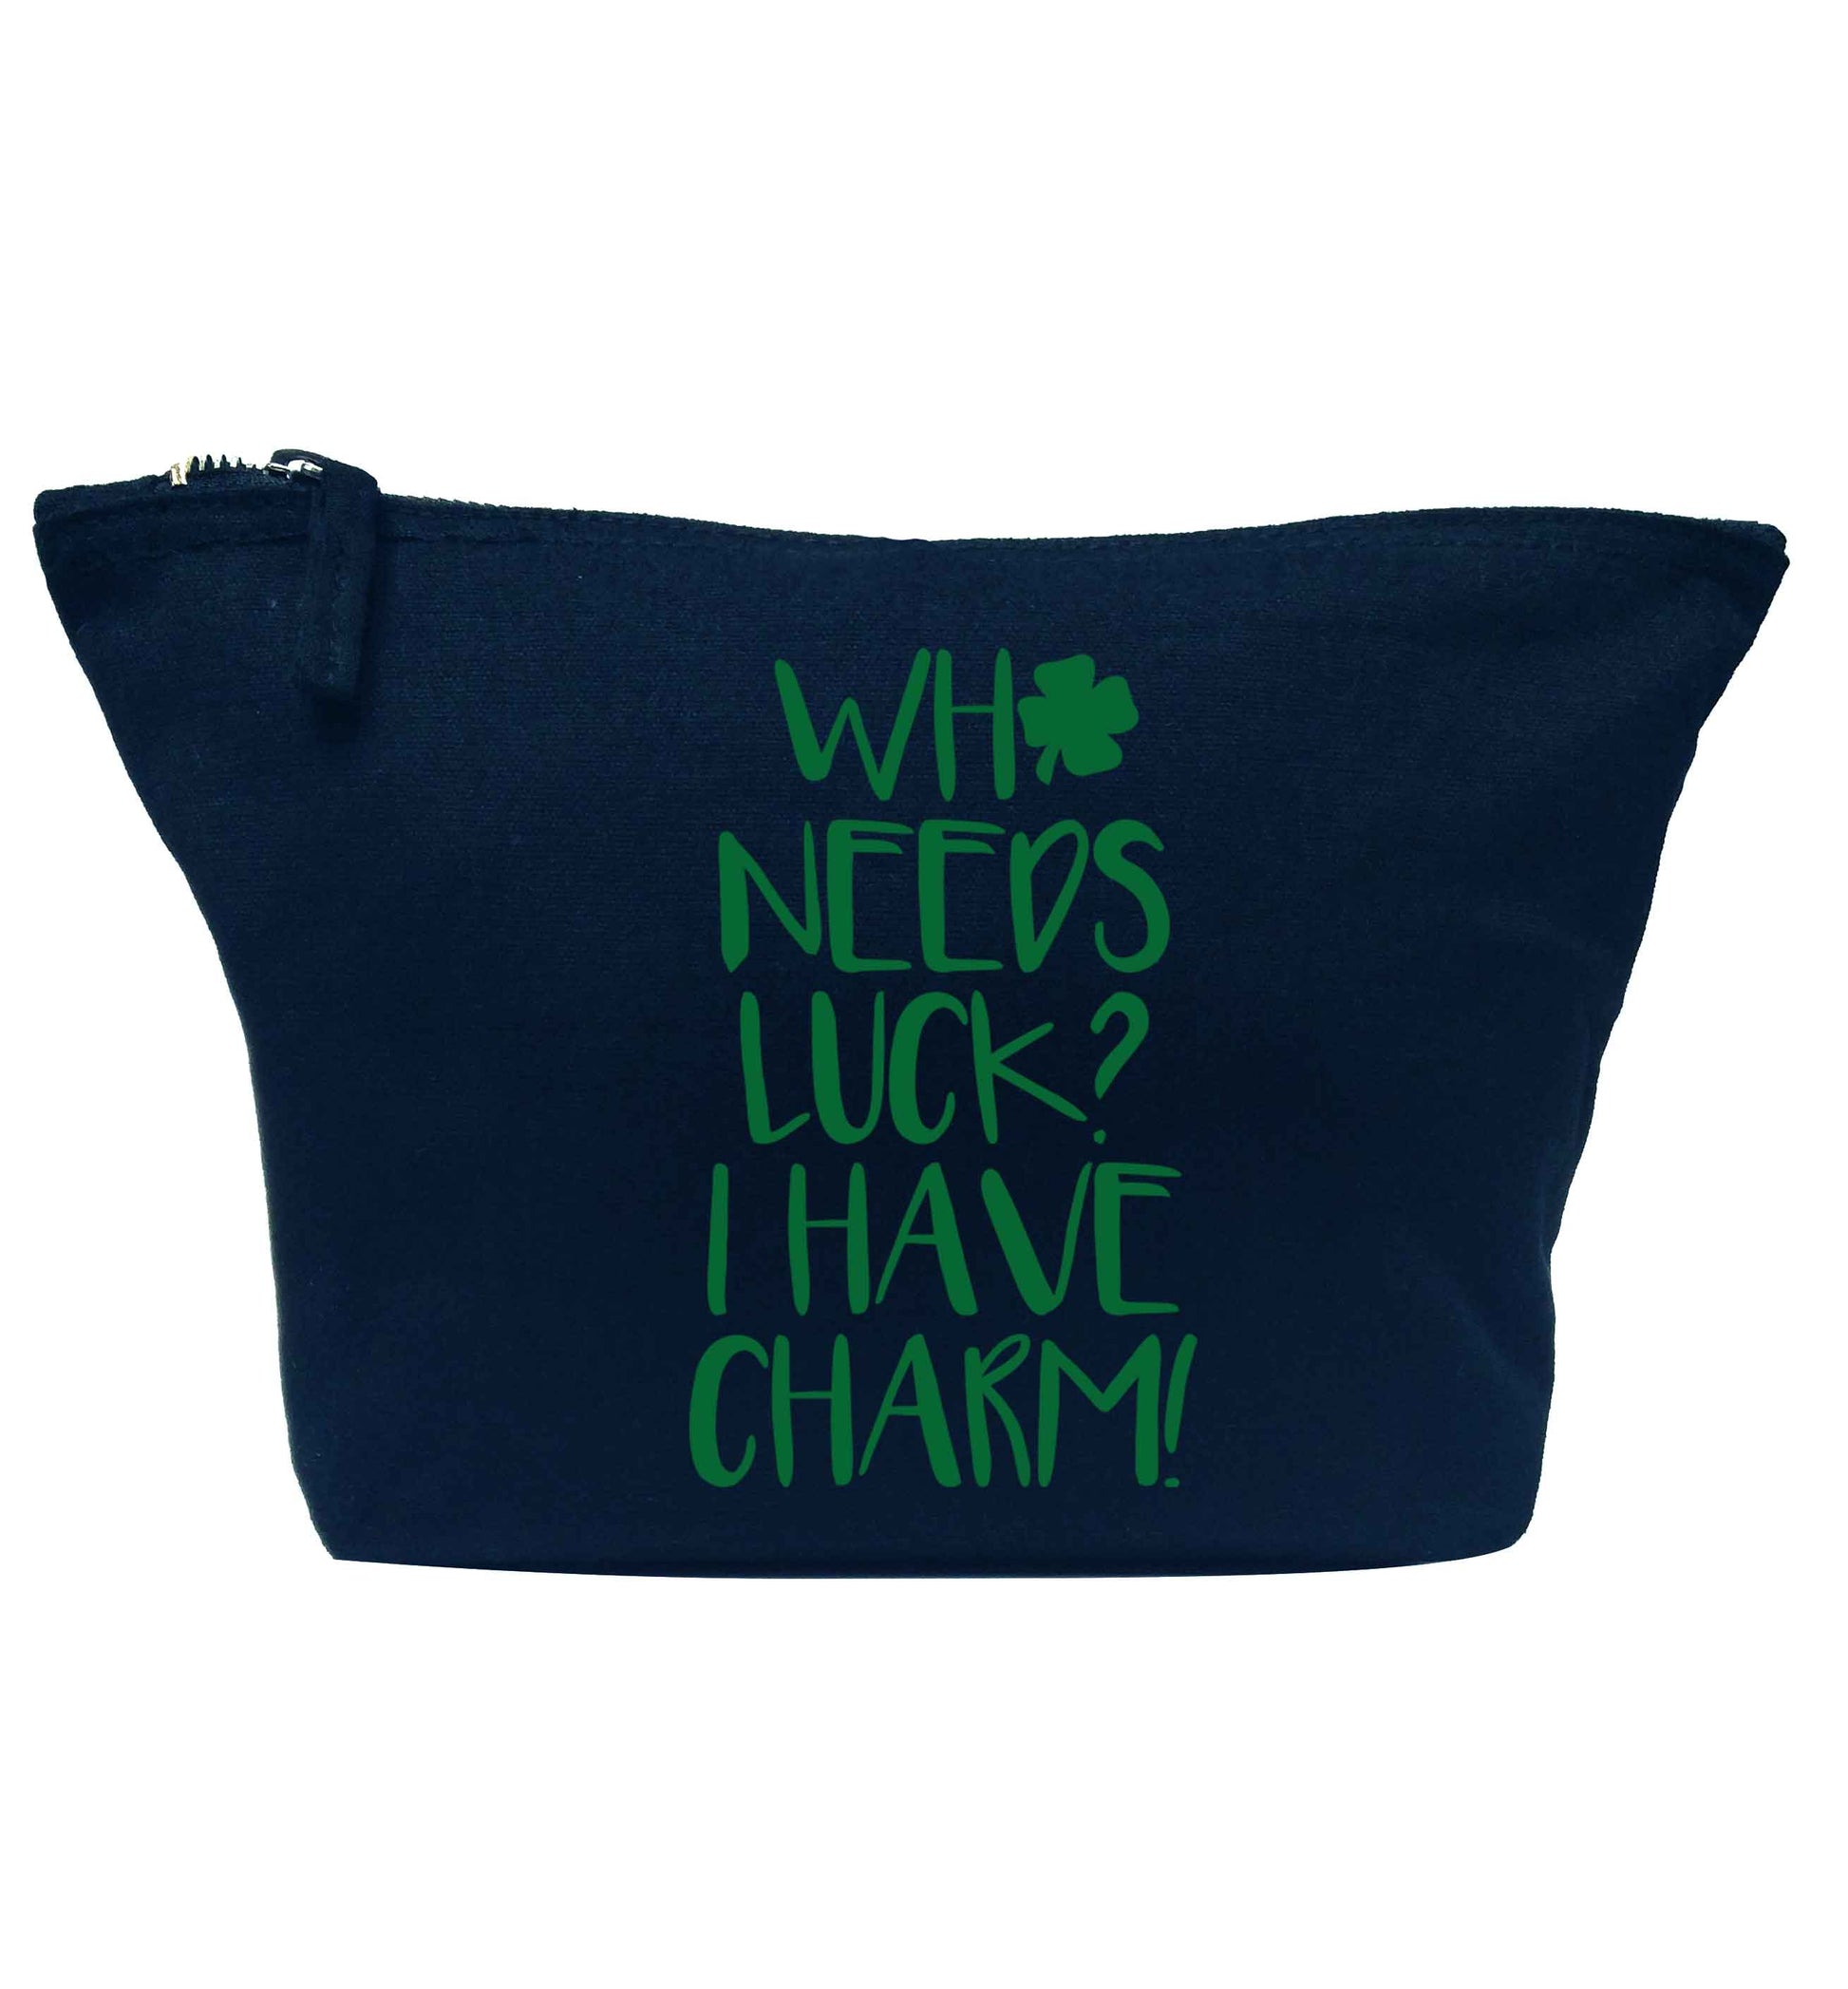 Who needs luck? I have charm! navy makeup bag